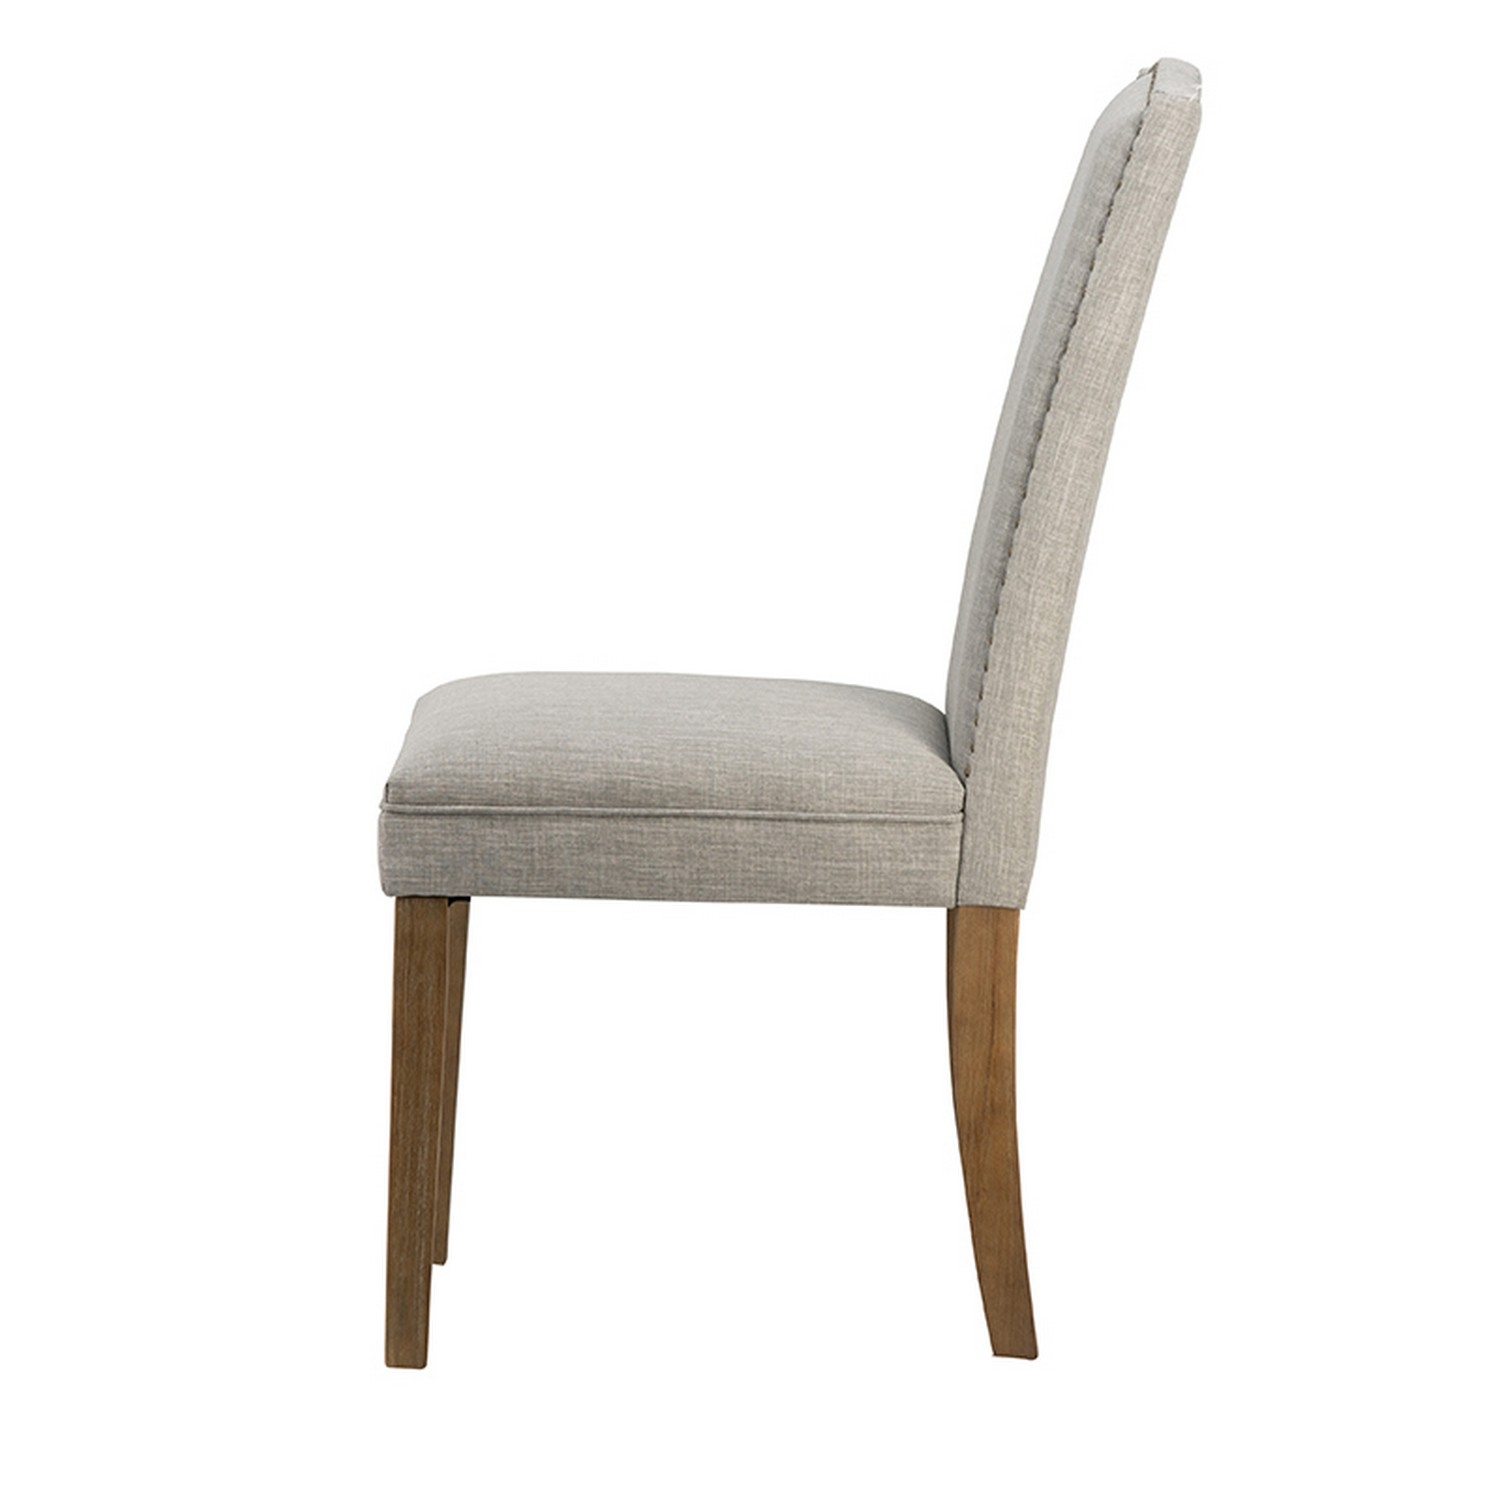 Elva 24 Inch Dining Chair, Smooth Gray Fabric, Nailhead Trim, Wood Legs- Saltoro Sherpi